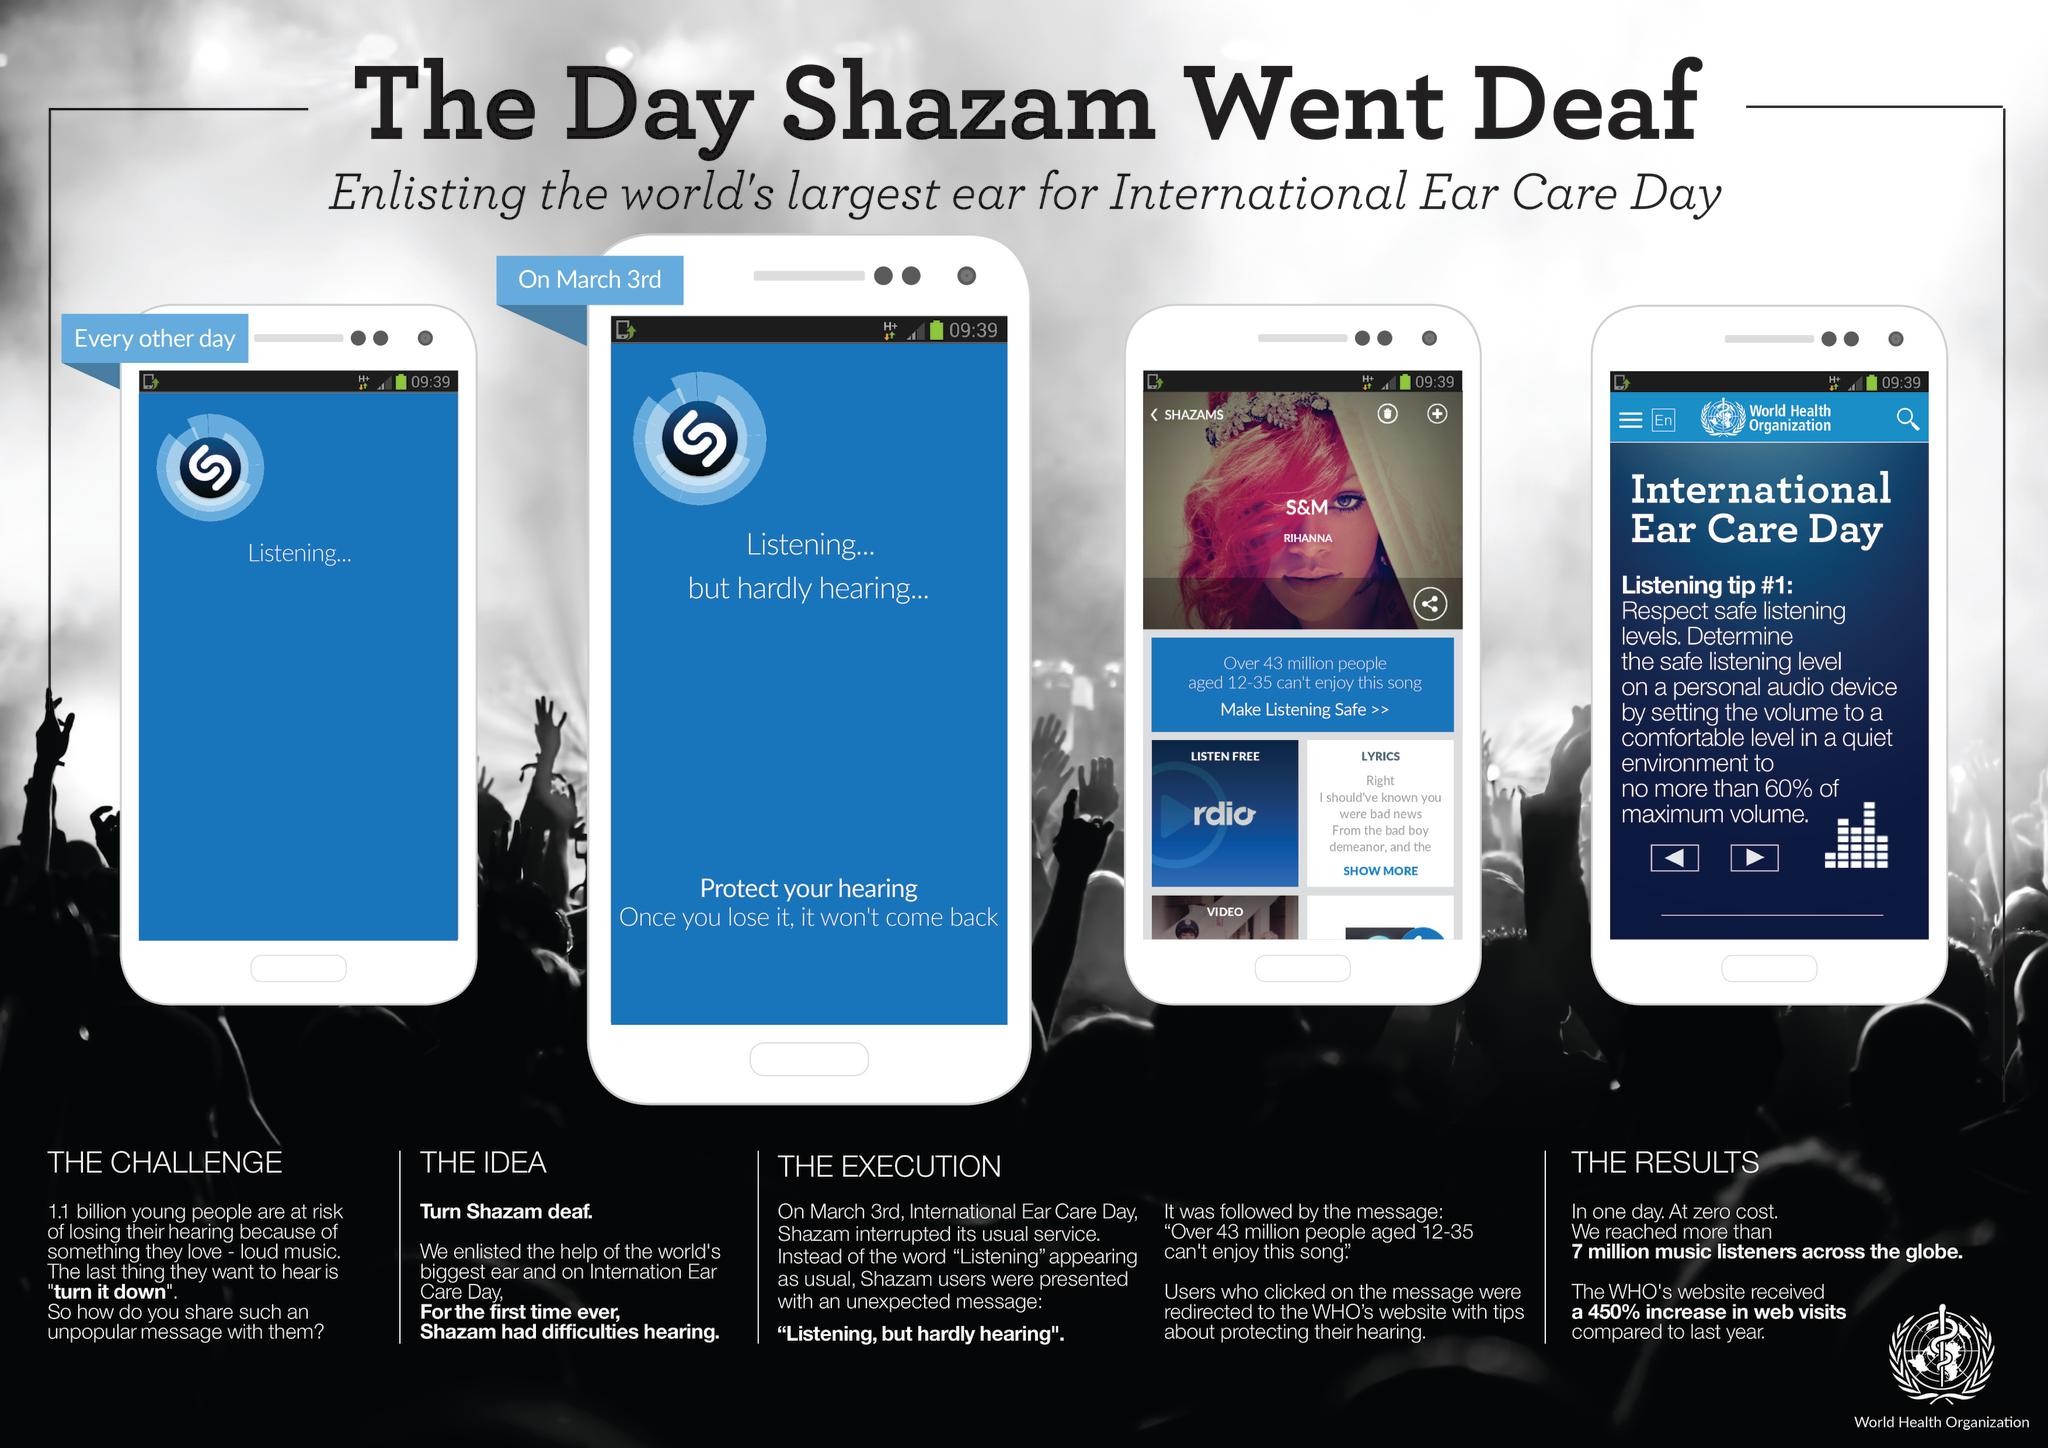 THE DAY SHAZAM WENT DEAF